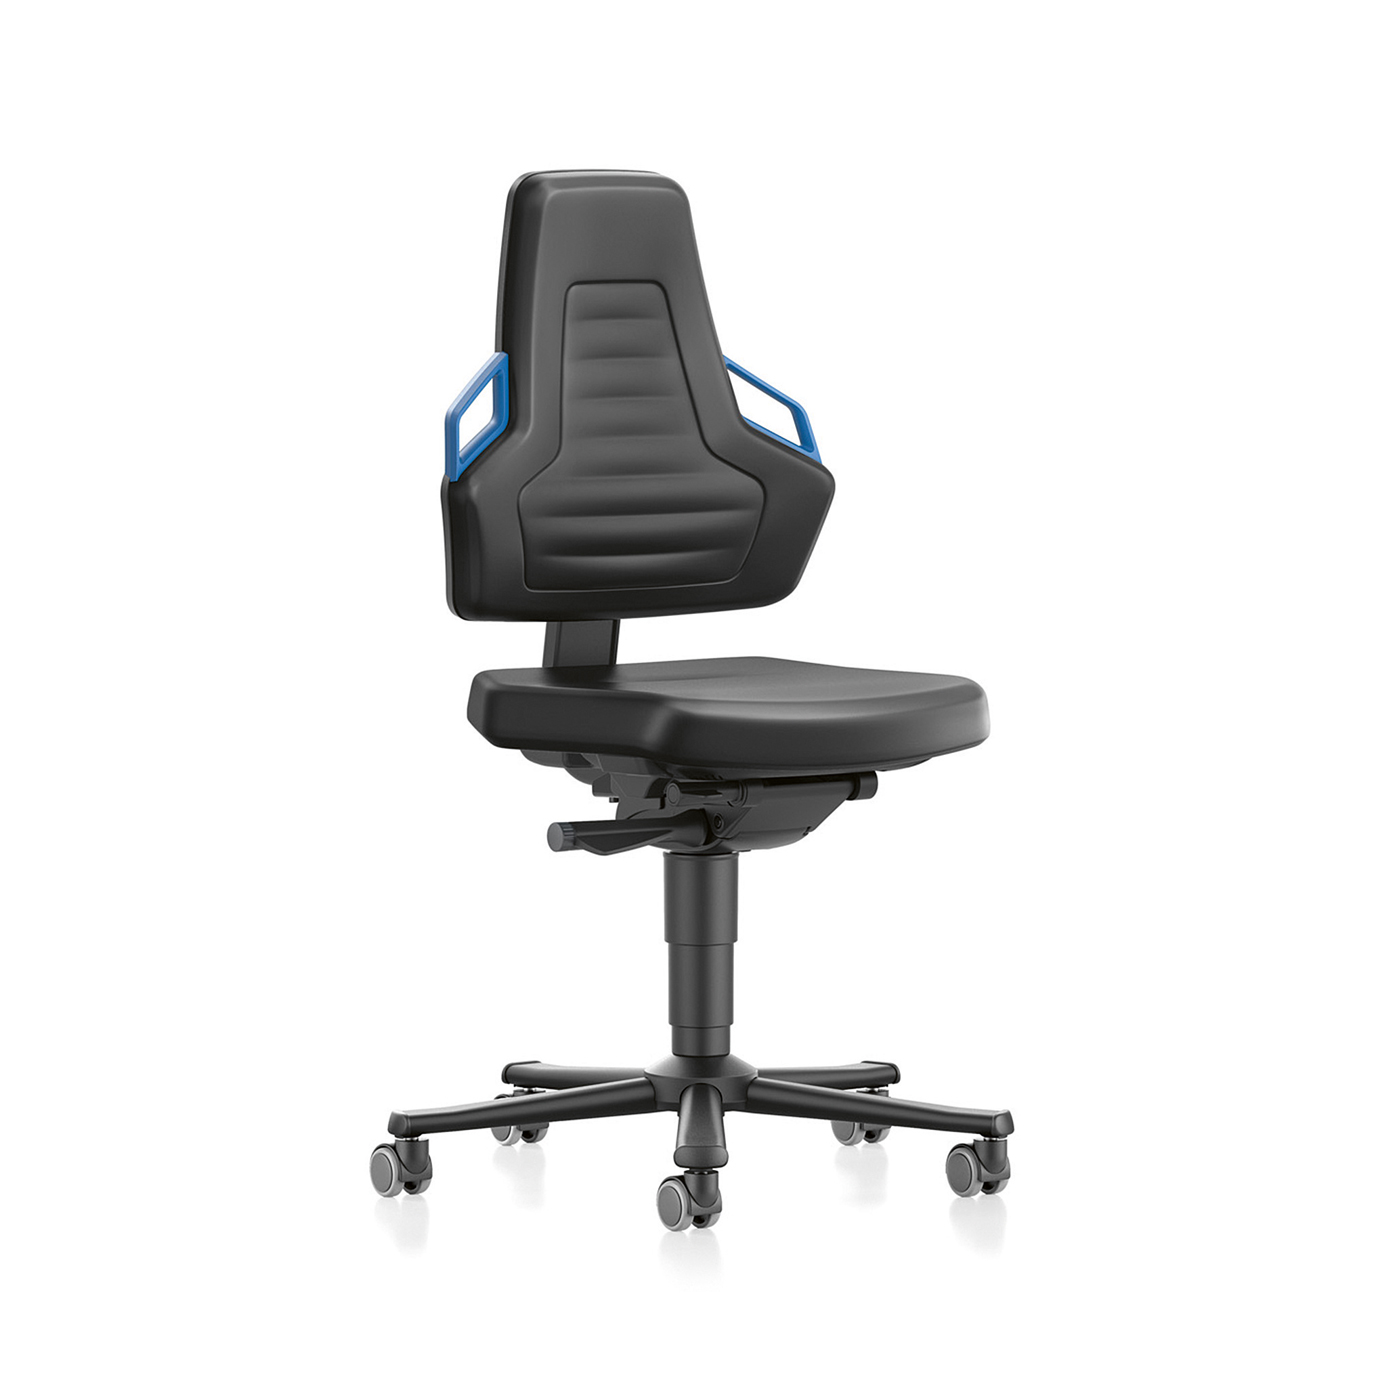 Nexxit Swivel Chair, Artificial leather black/blue - 1 piece